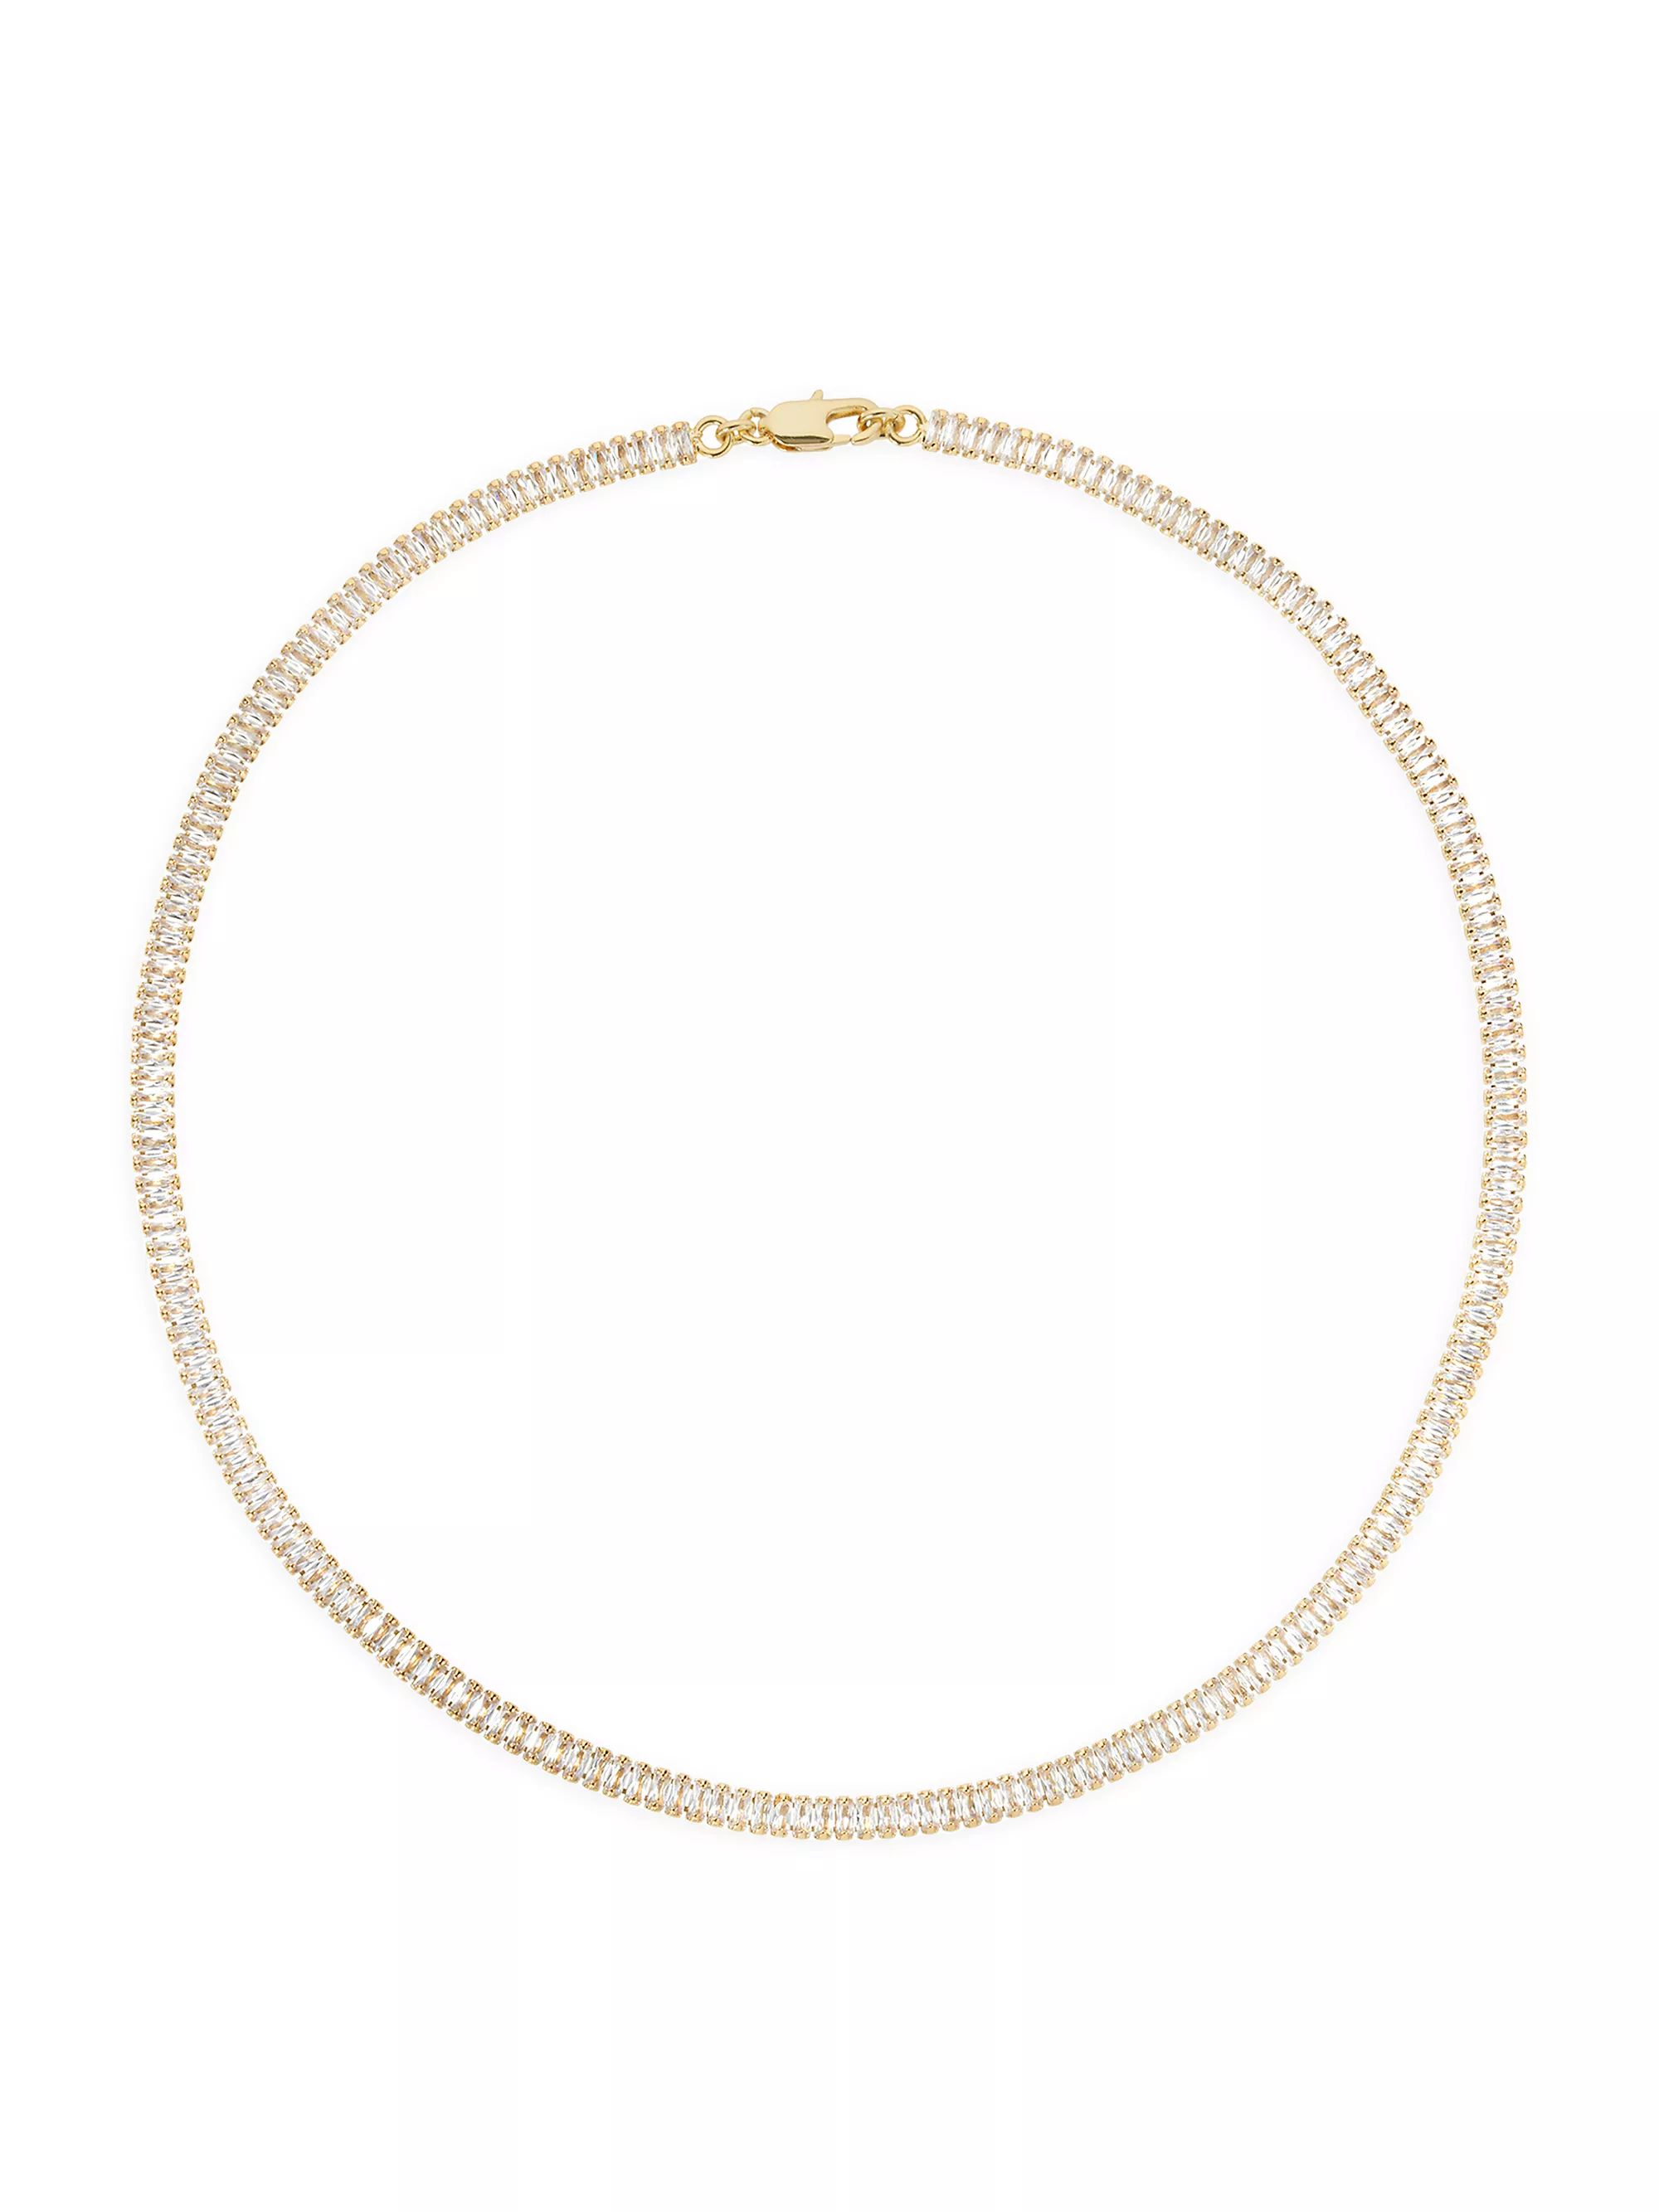 Teagan Sterling Silver & Cubic Zirconia Tennis Necklace | Saks Fifth Avenue